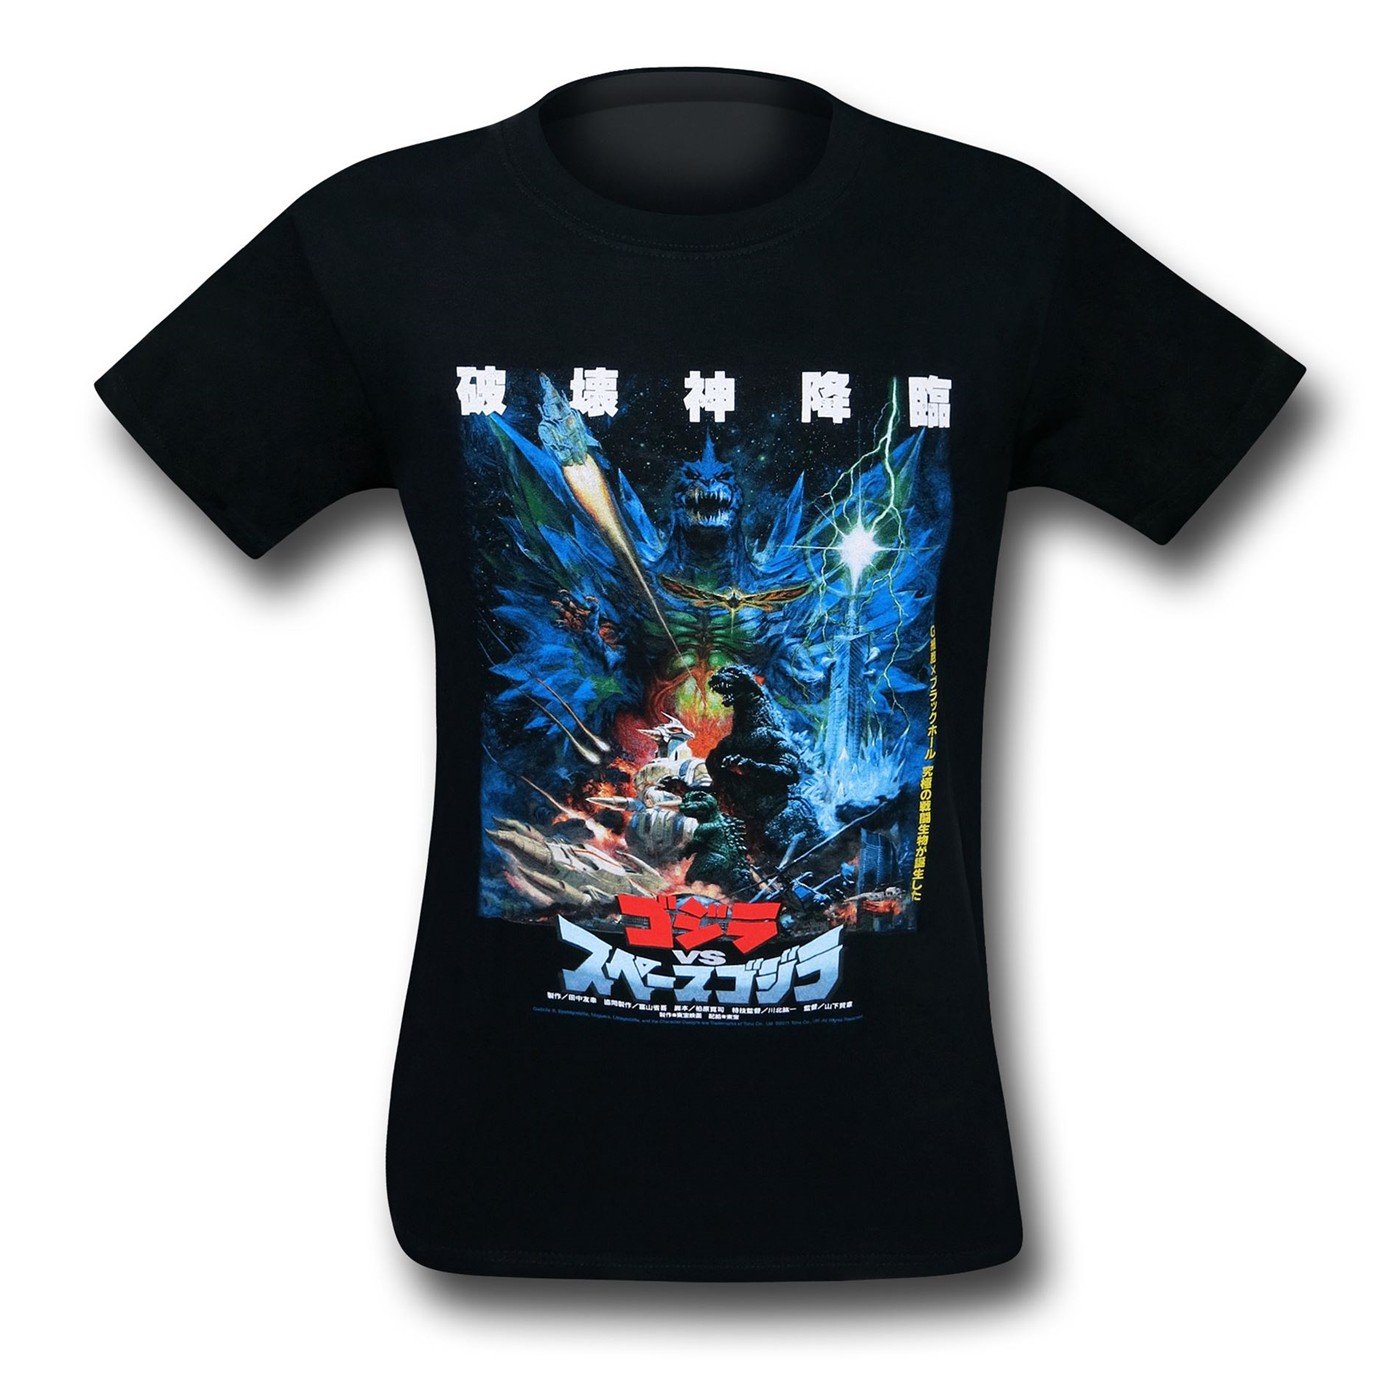 Godzilla Vs. SpaceGodzilla Poster T-Shirt